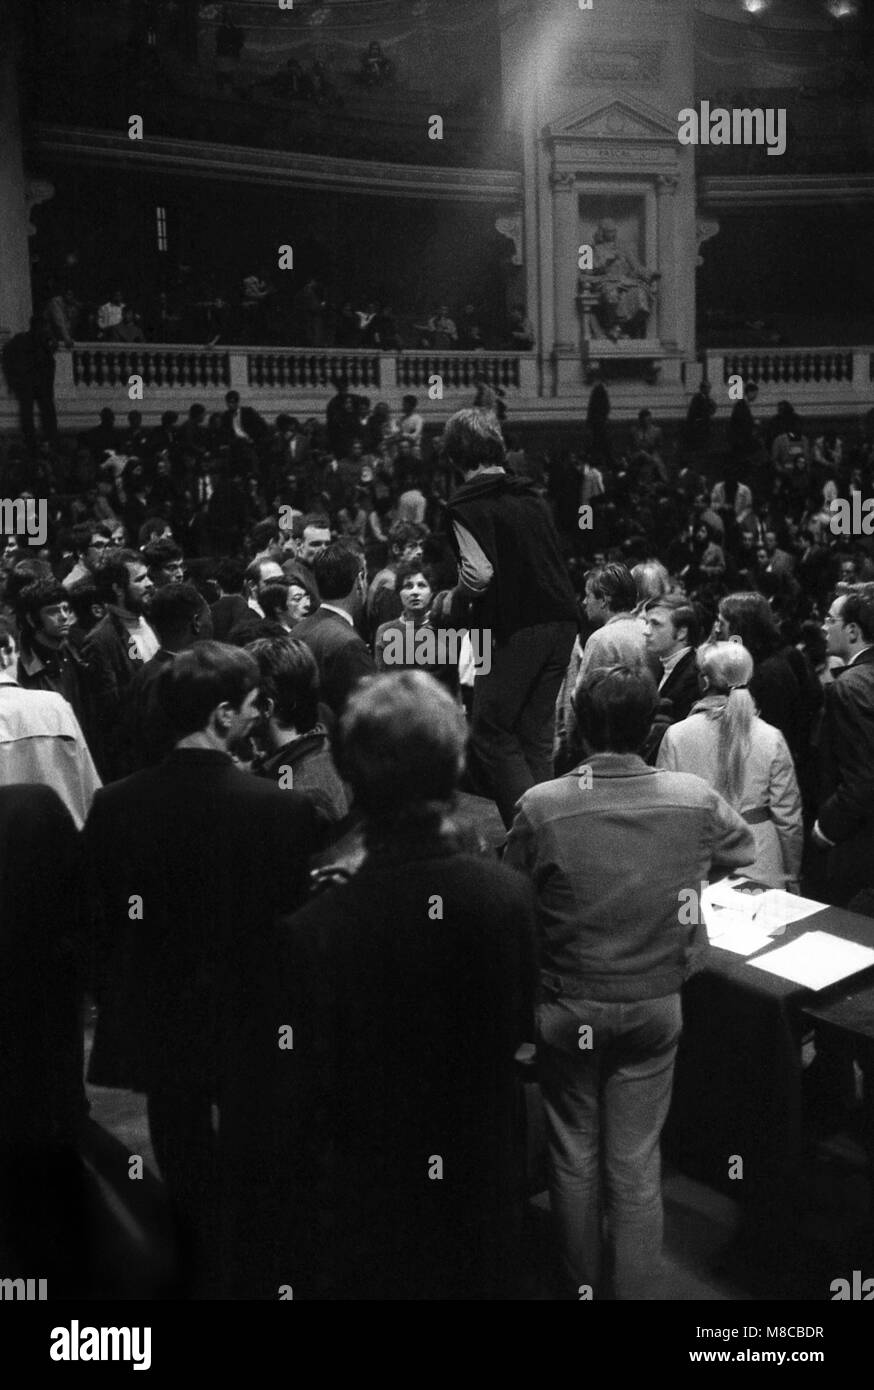 Philippe Gras / Le Pictorium -  May 1968 -  1968  -  France / Ile-de-France (region) / Paris  -  Rally at the Sorbonne, 1968 Stock Photo